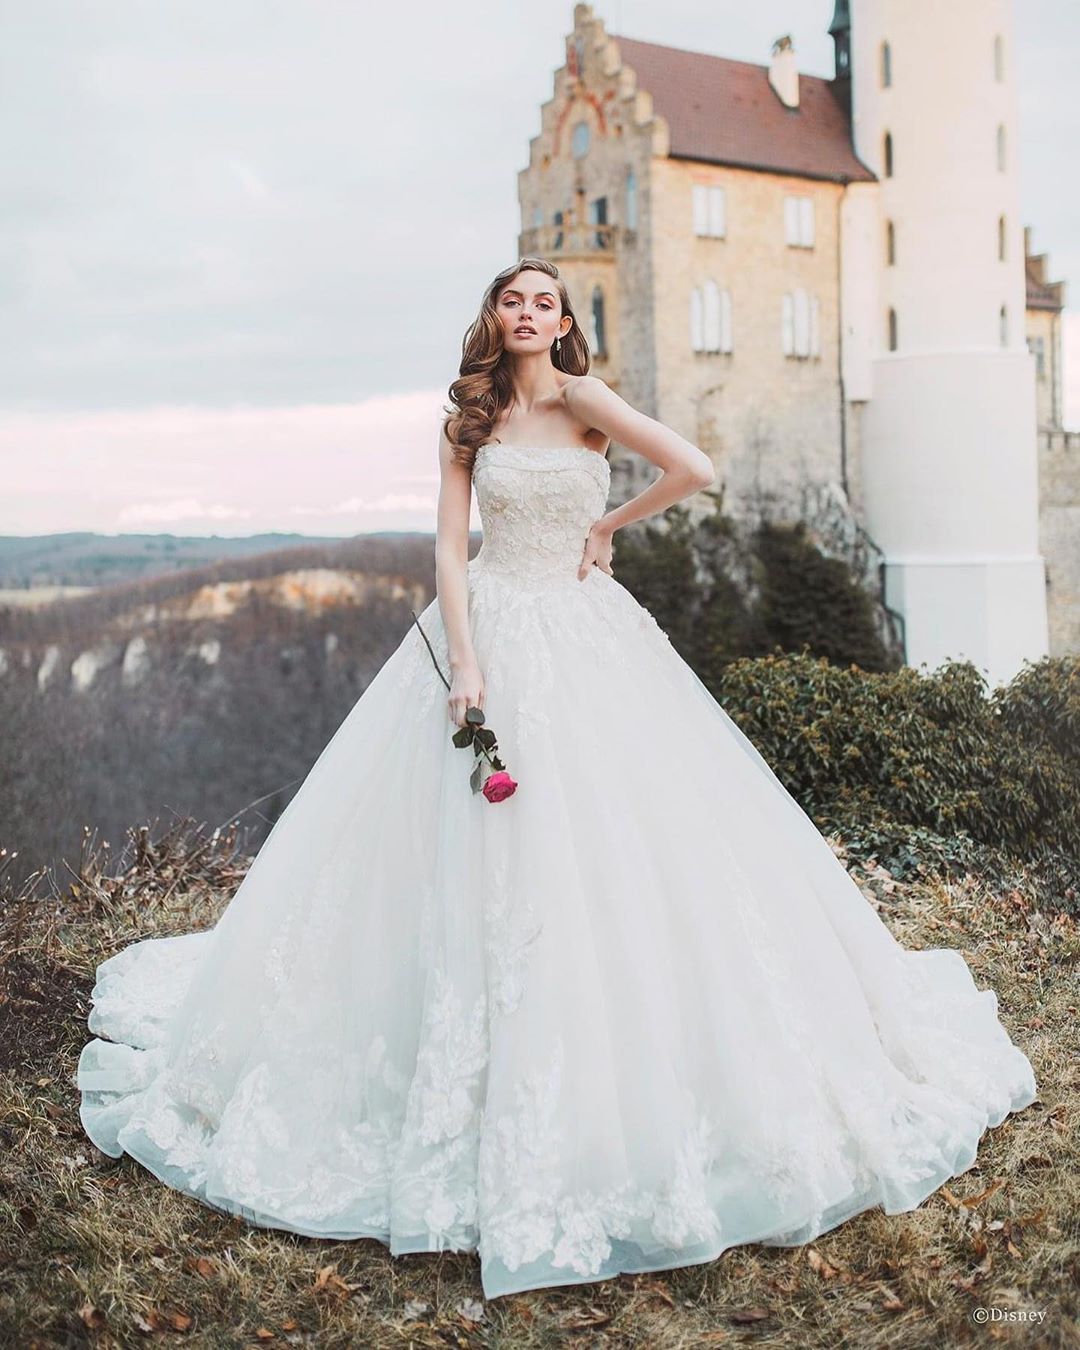 Disney Princess-Themed Wedding Dresses: The New Bridal Trend? - Brit + Co